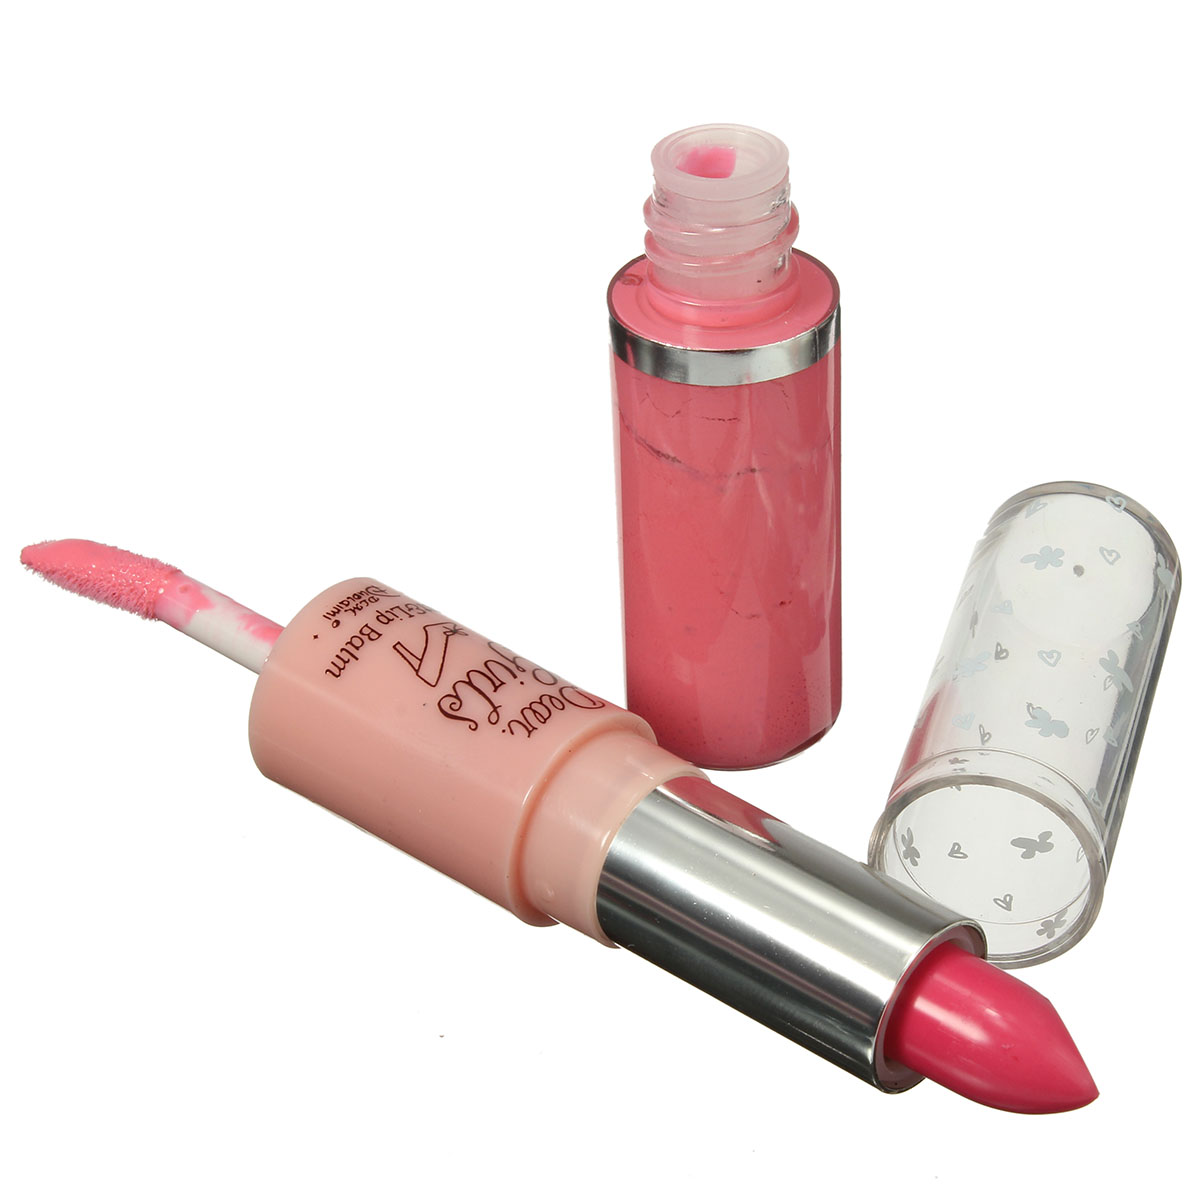 10-Colors-Double-Head-Natural-Lipstick-Moisturing-Brighten-Lip-Gloss-Makeup-Comestic-1124974